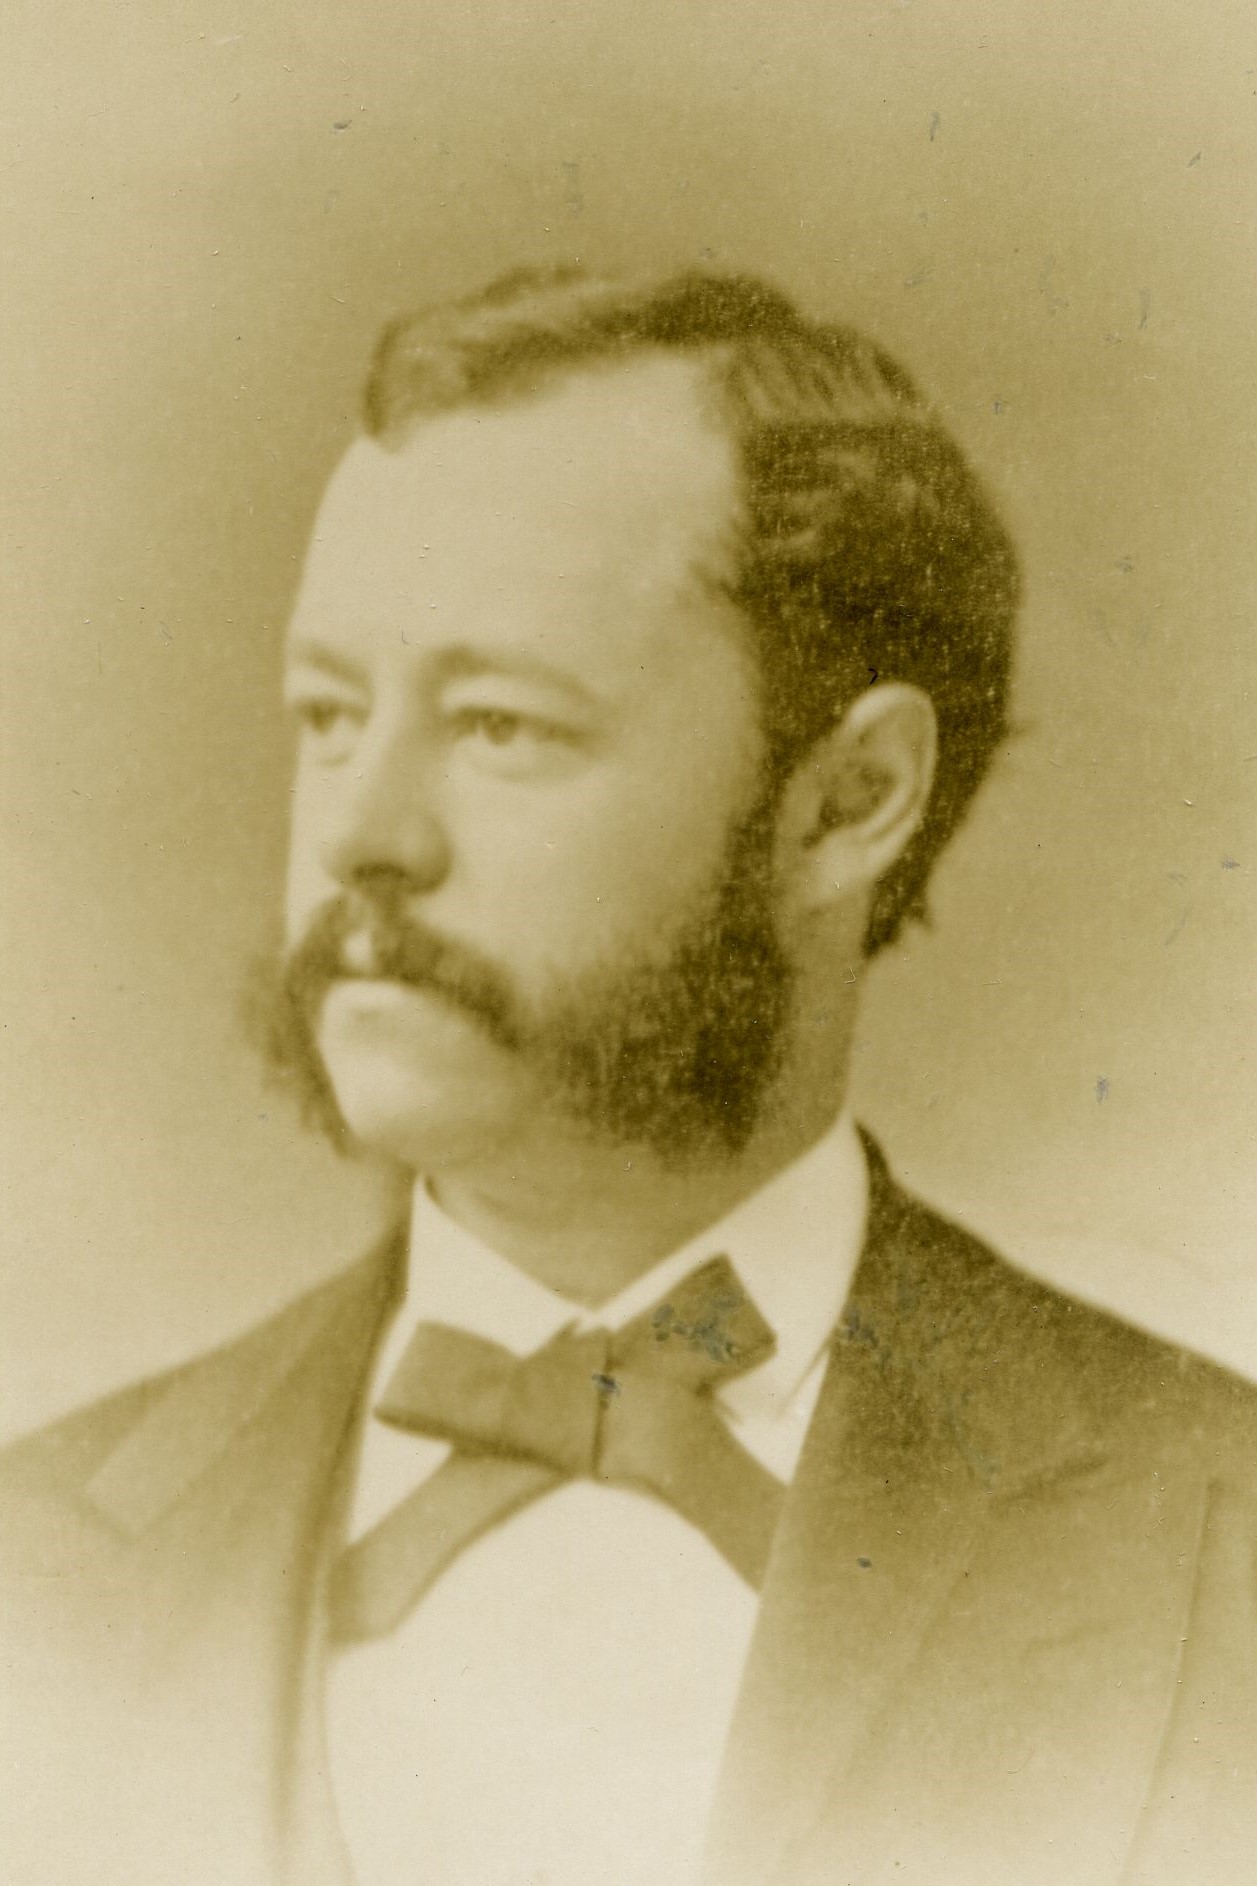 Member portrait of Francis M. Weld